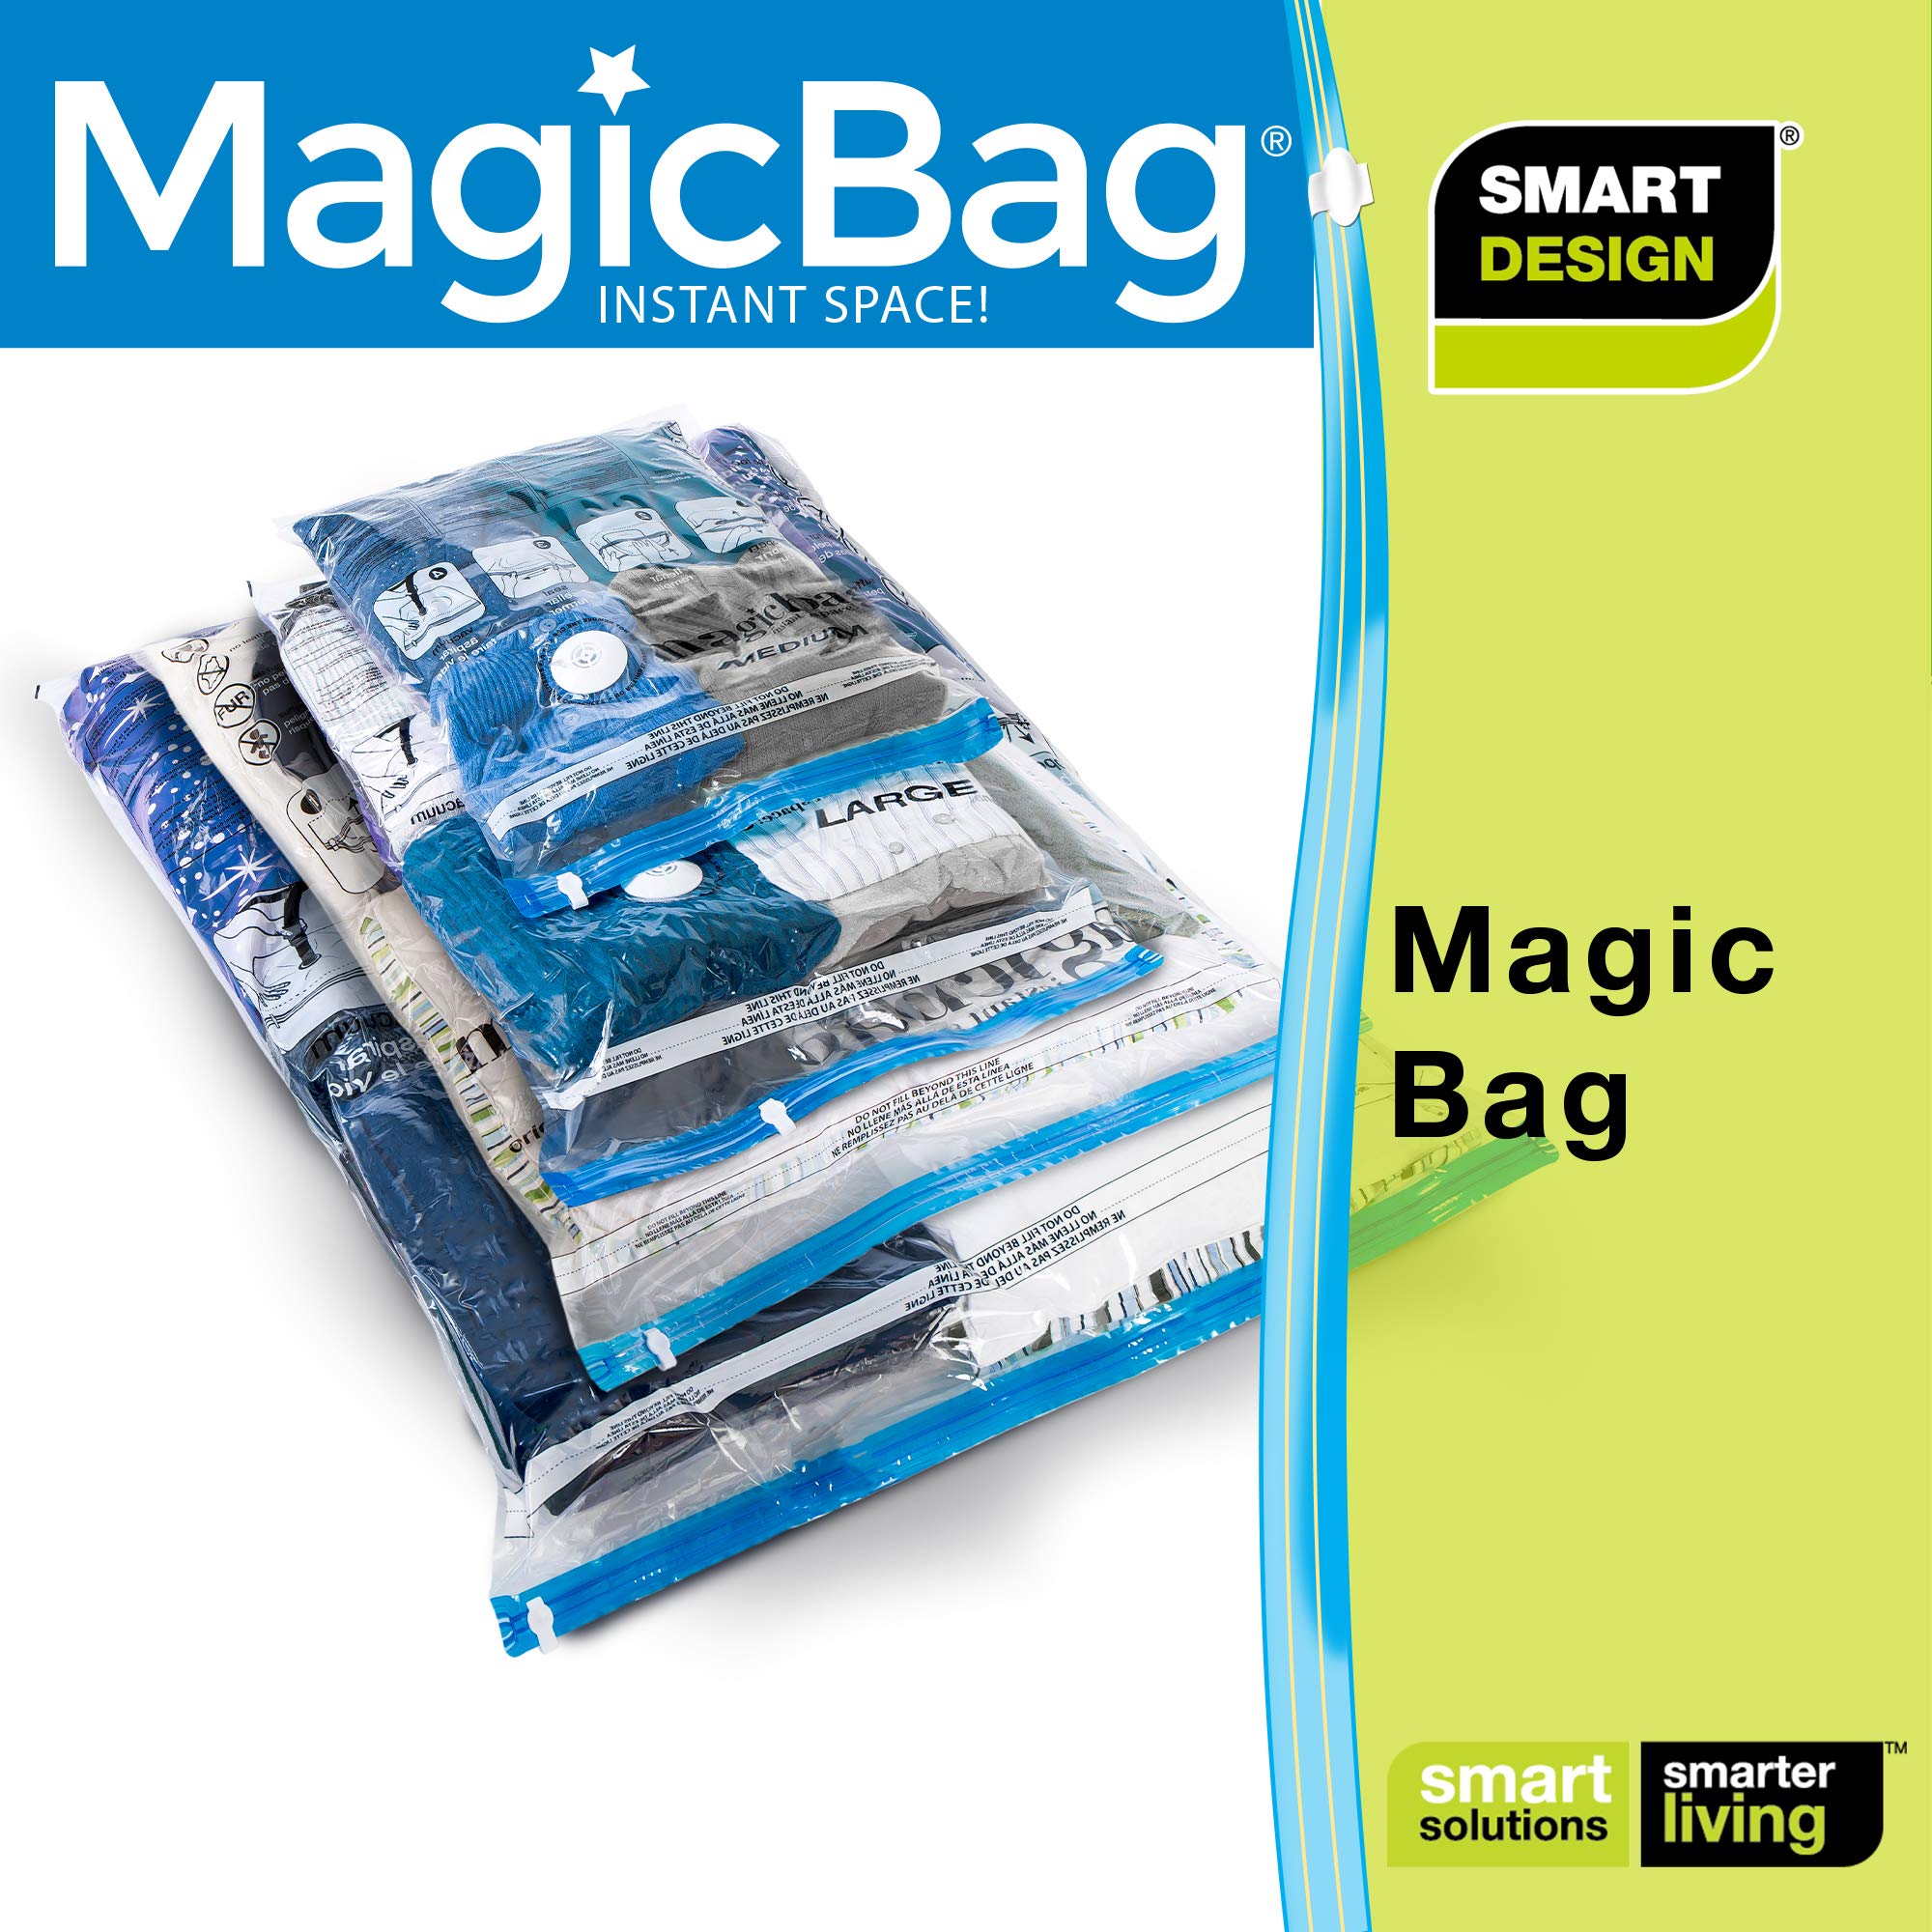 MagicBag XXL Jumbo Space Saver Storage Bags - 6 Pack Reviews